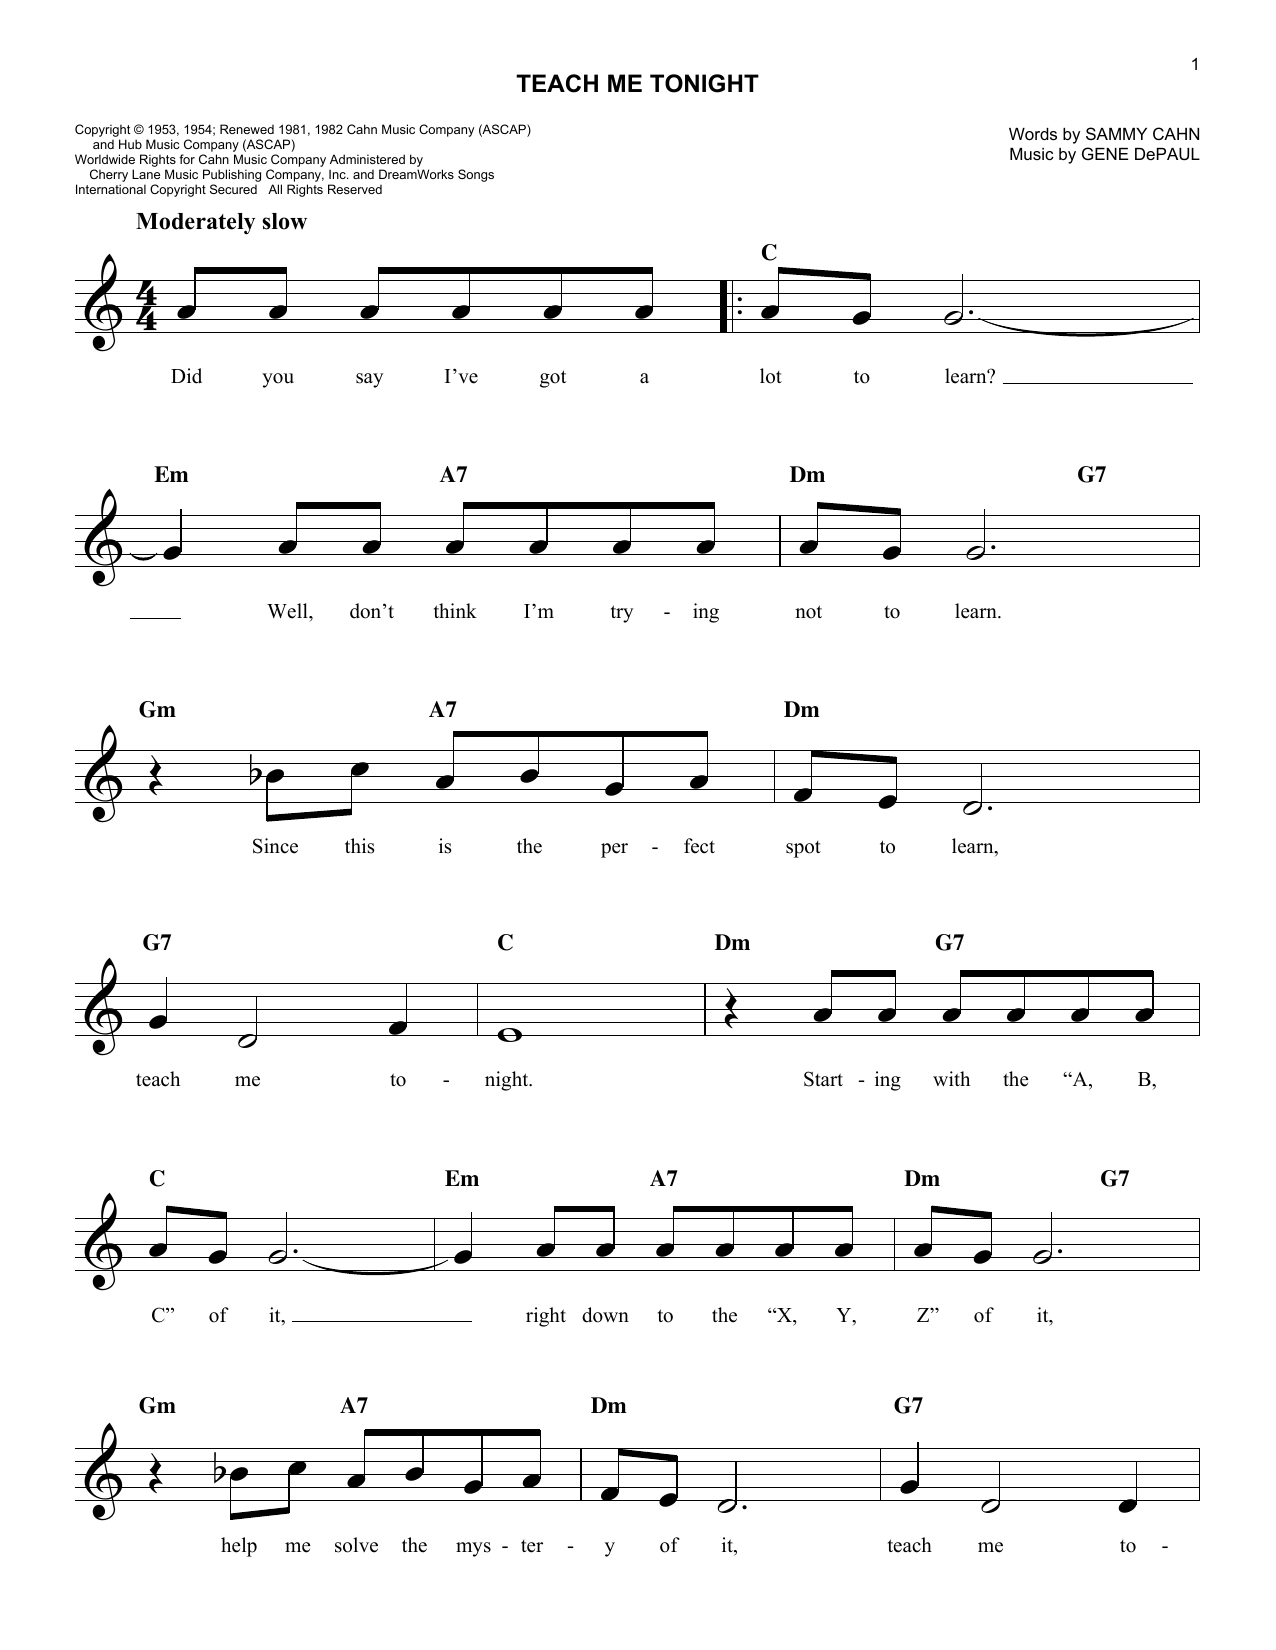 Gene De Paul Teach Me Tonight Sheet Music Notes & Chords for Lead Sheet / Fake Book - Download or Print PDF